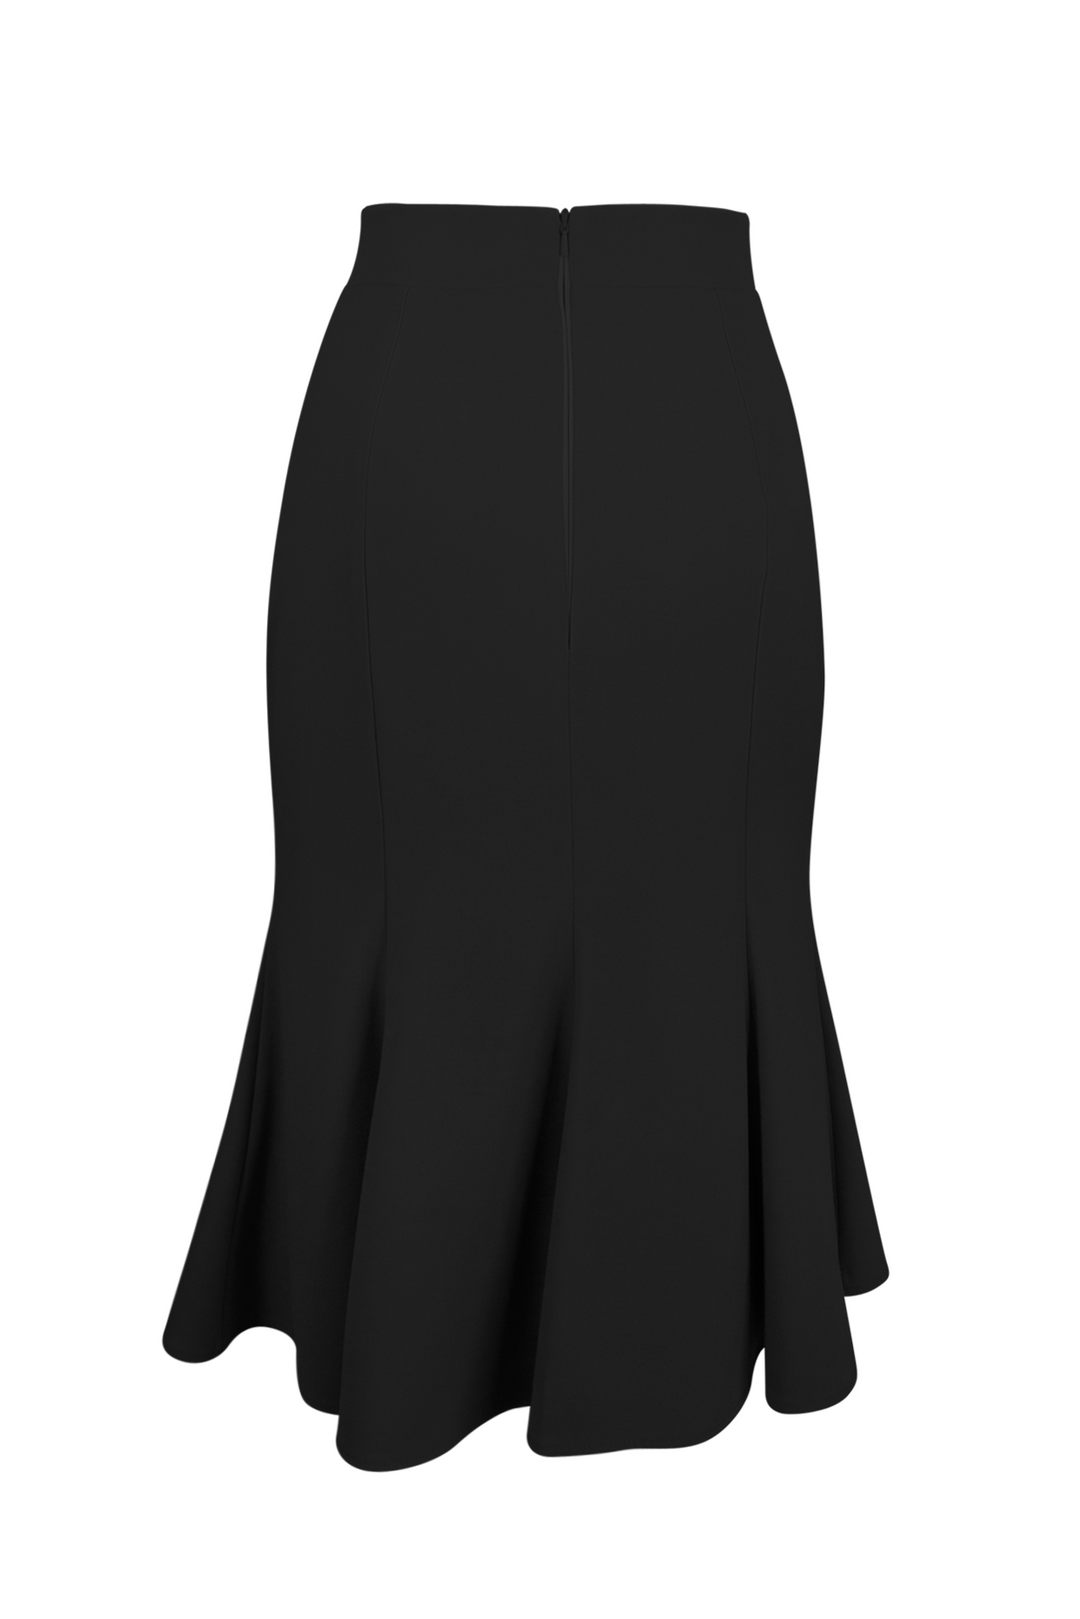 Cotton Tail Soiree Classic Skirt (Black)